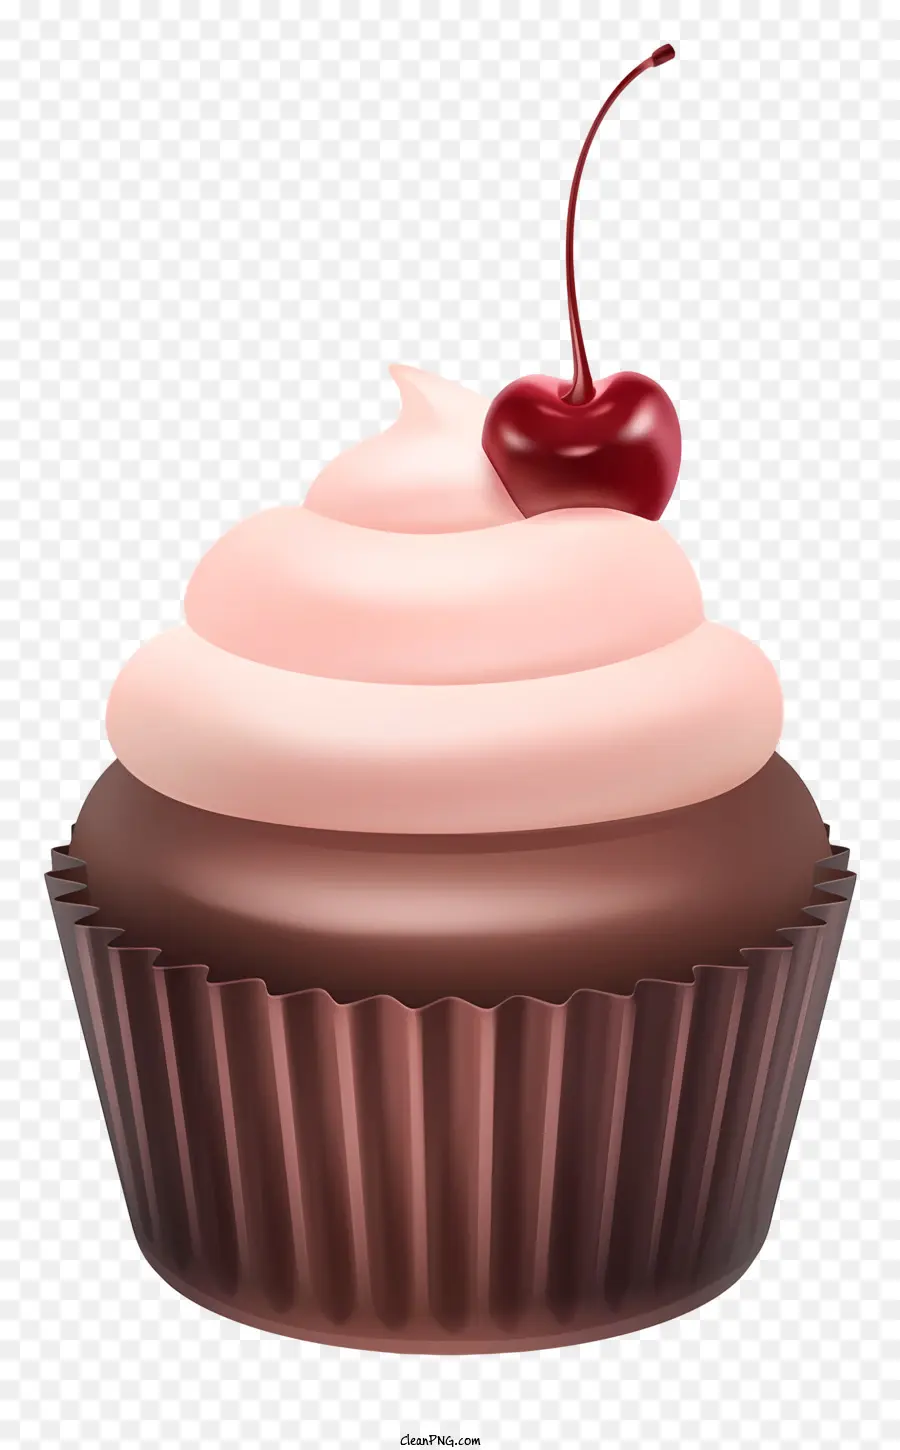 chocolate cupcake chocolate frosting cherry on top dark background fresh and juicy cherry